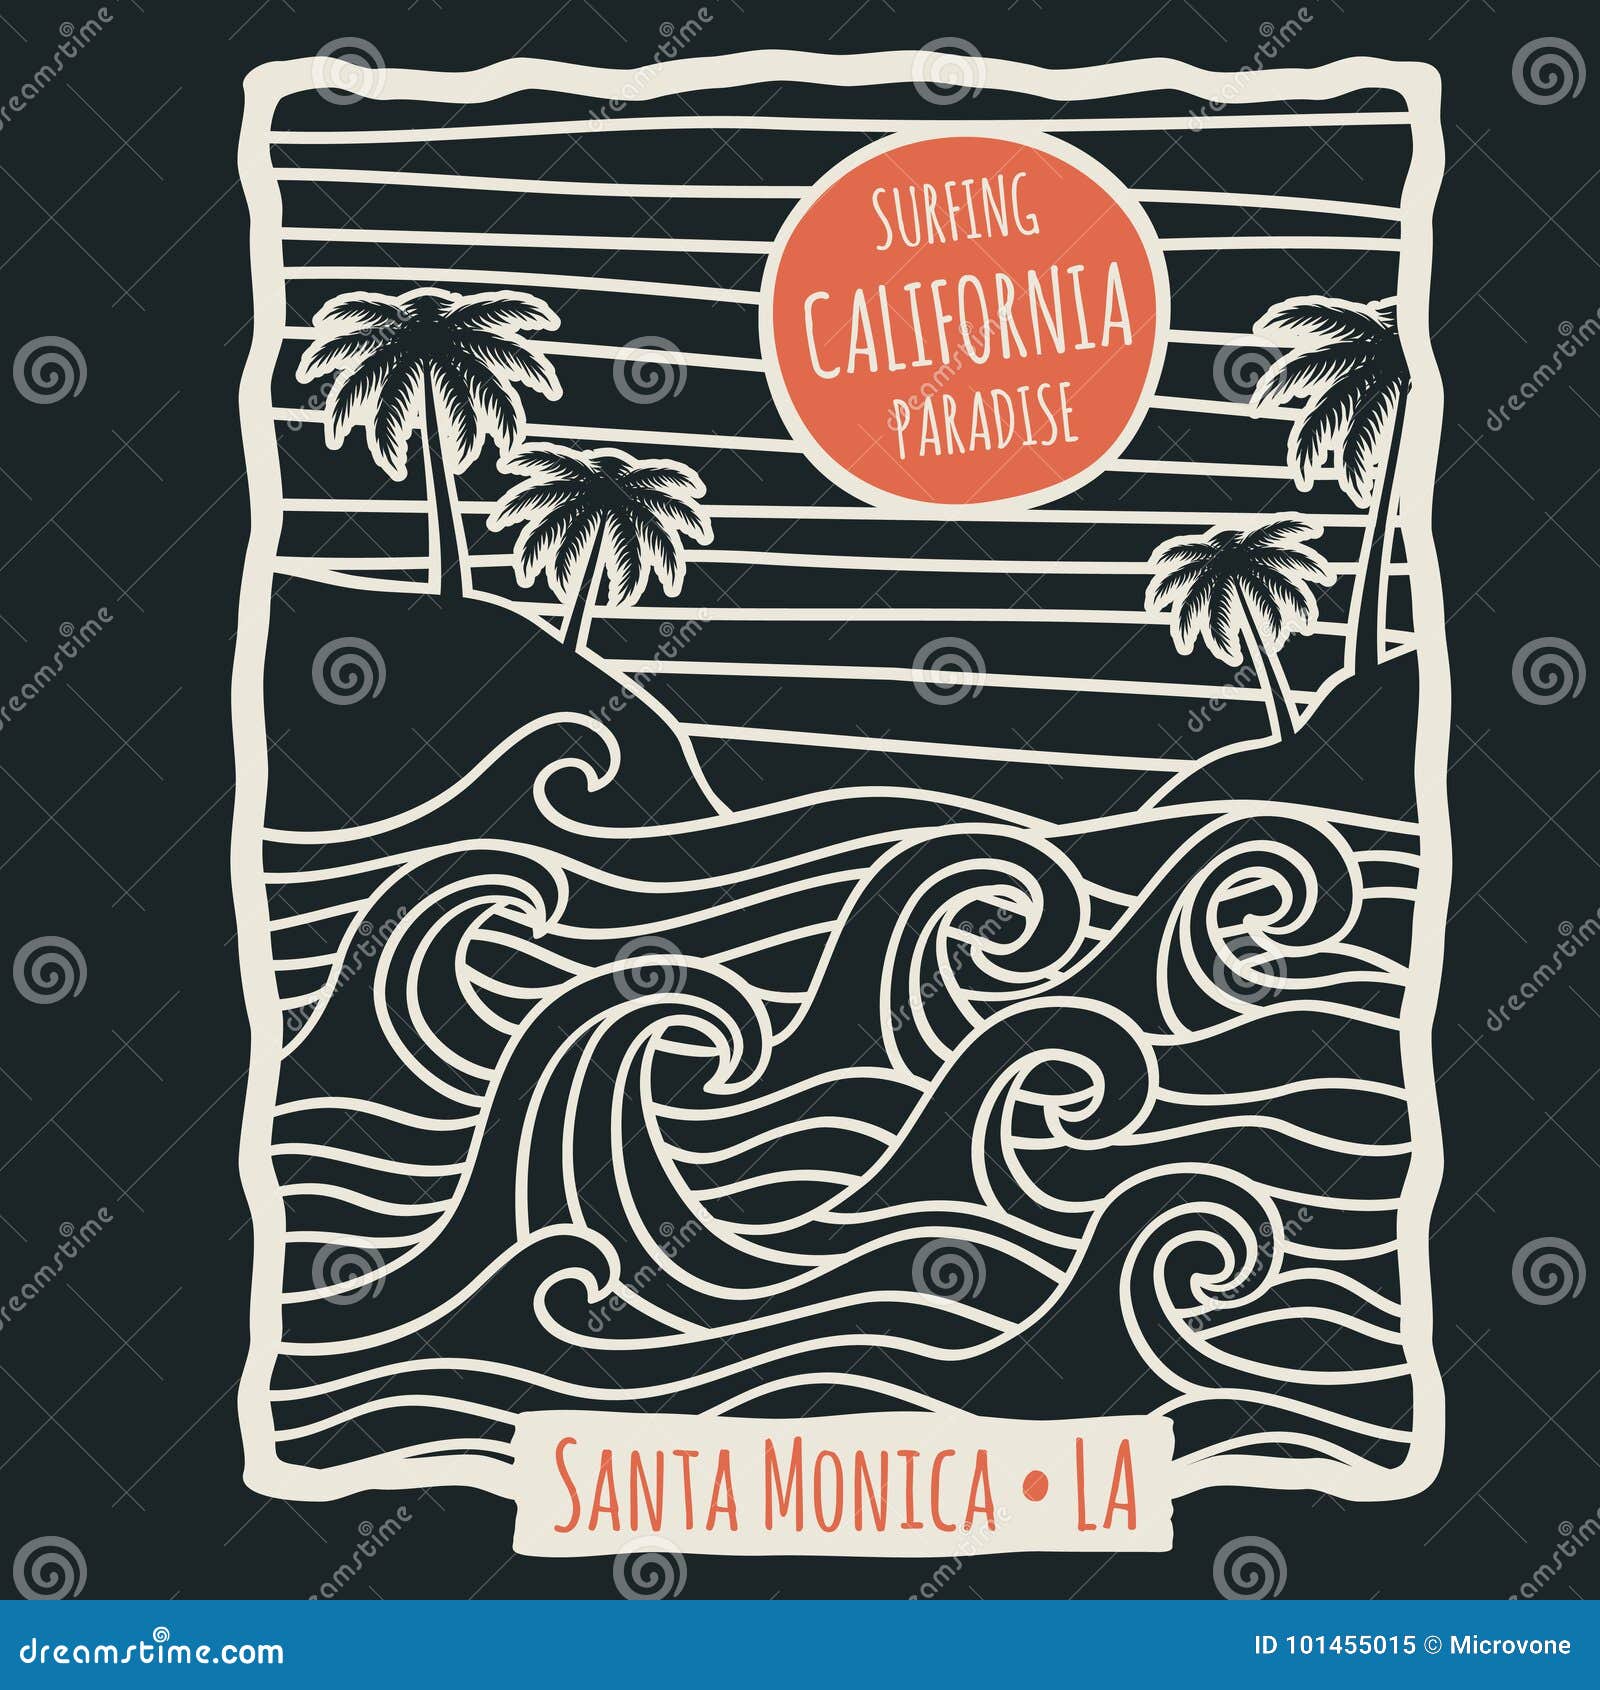 retro california summer beach surf  t shirt   with palm trees and ocean waves